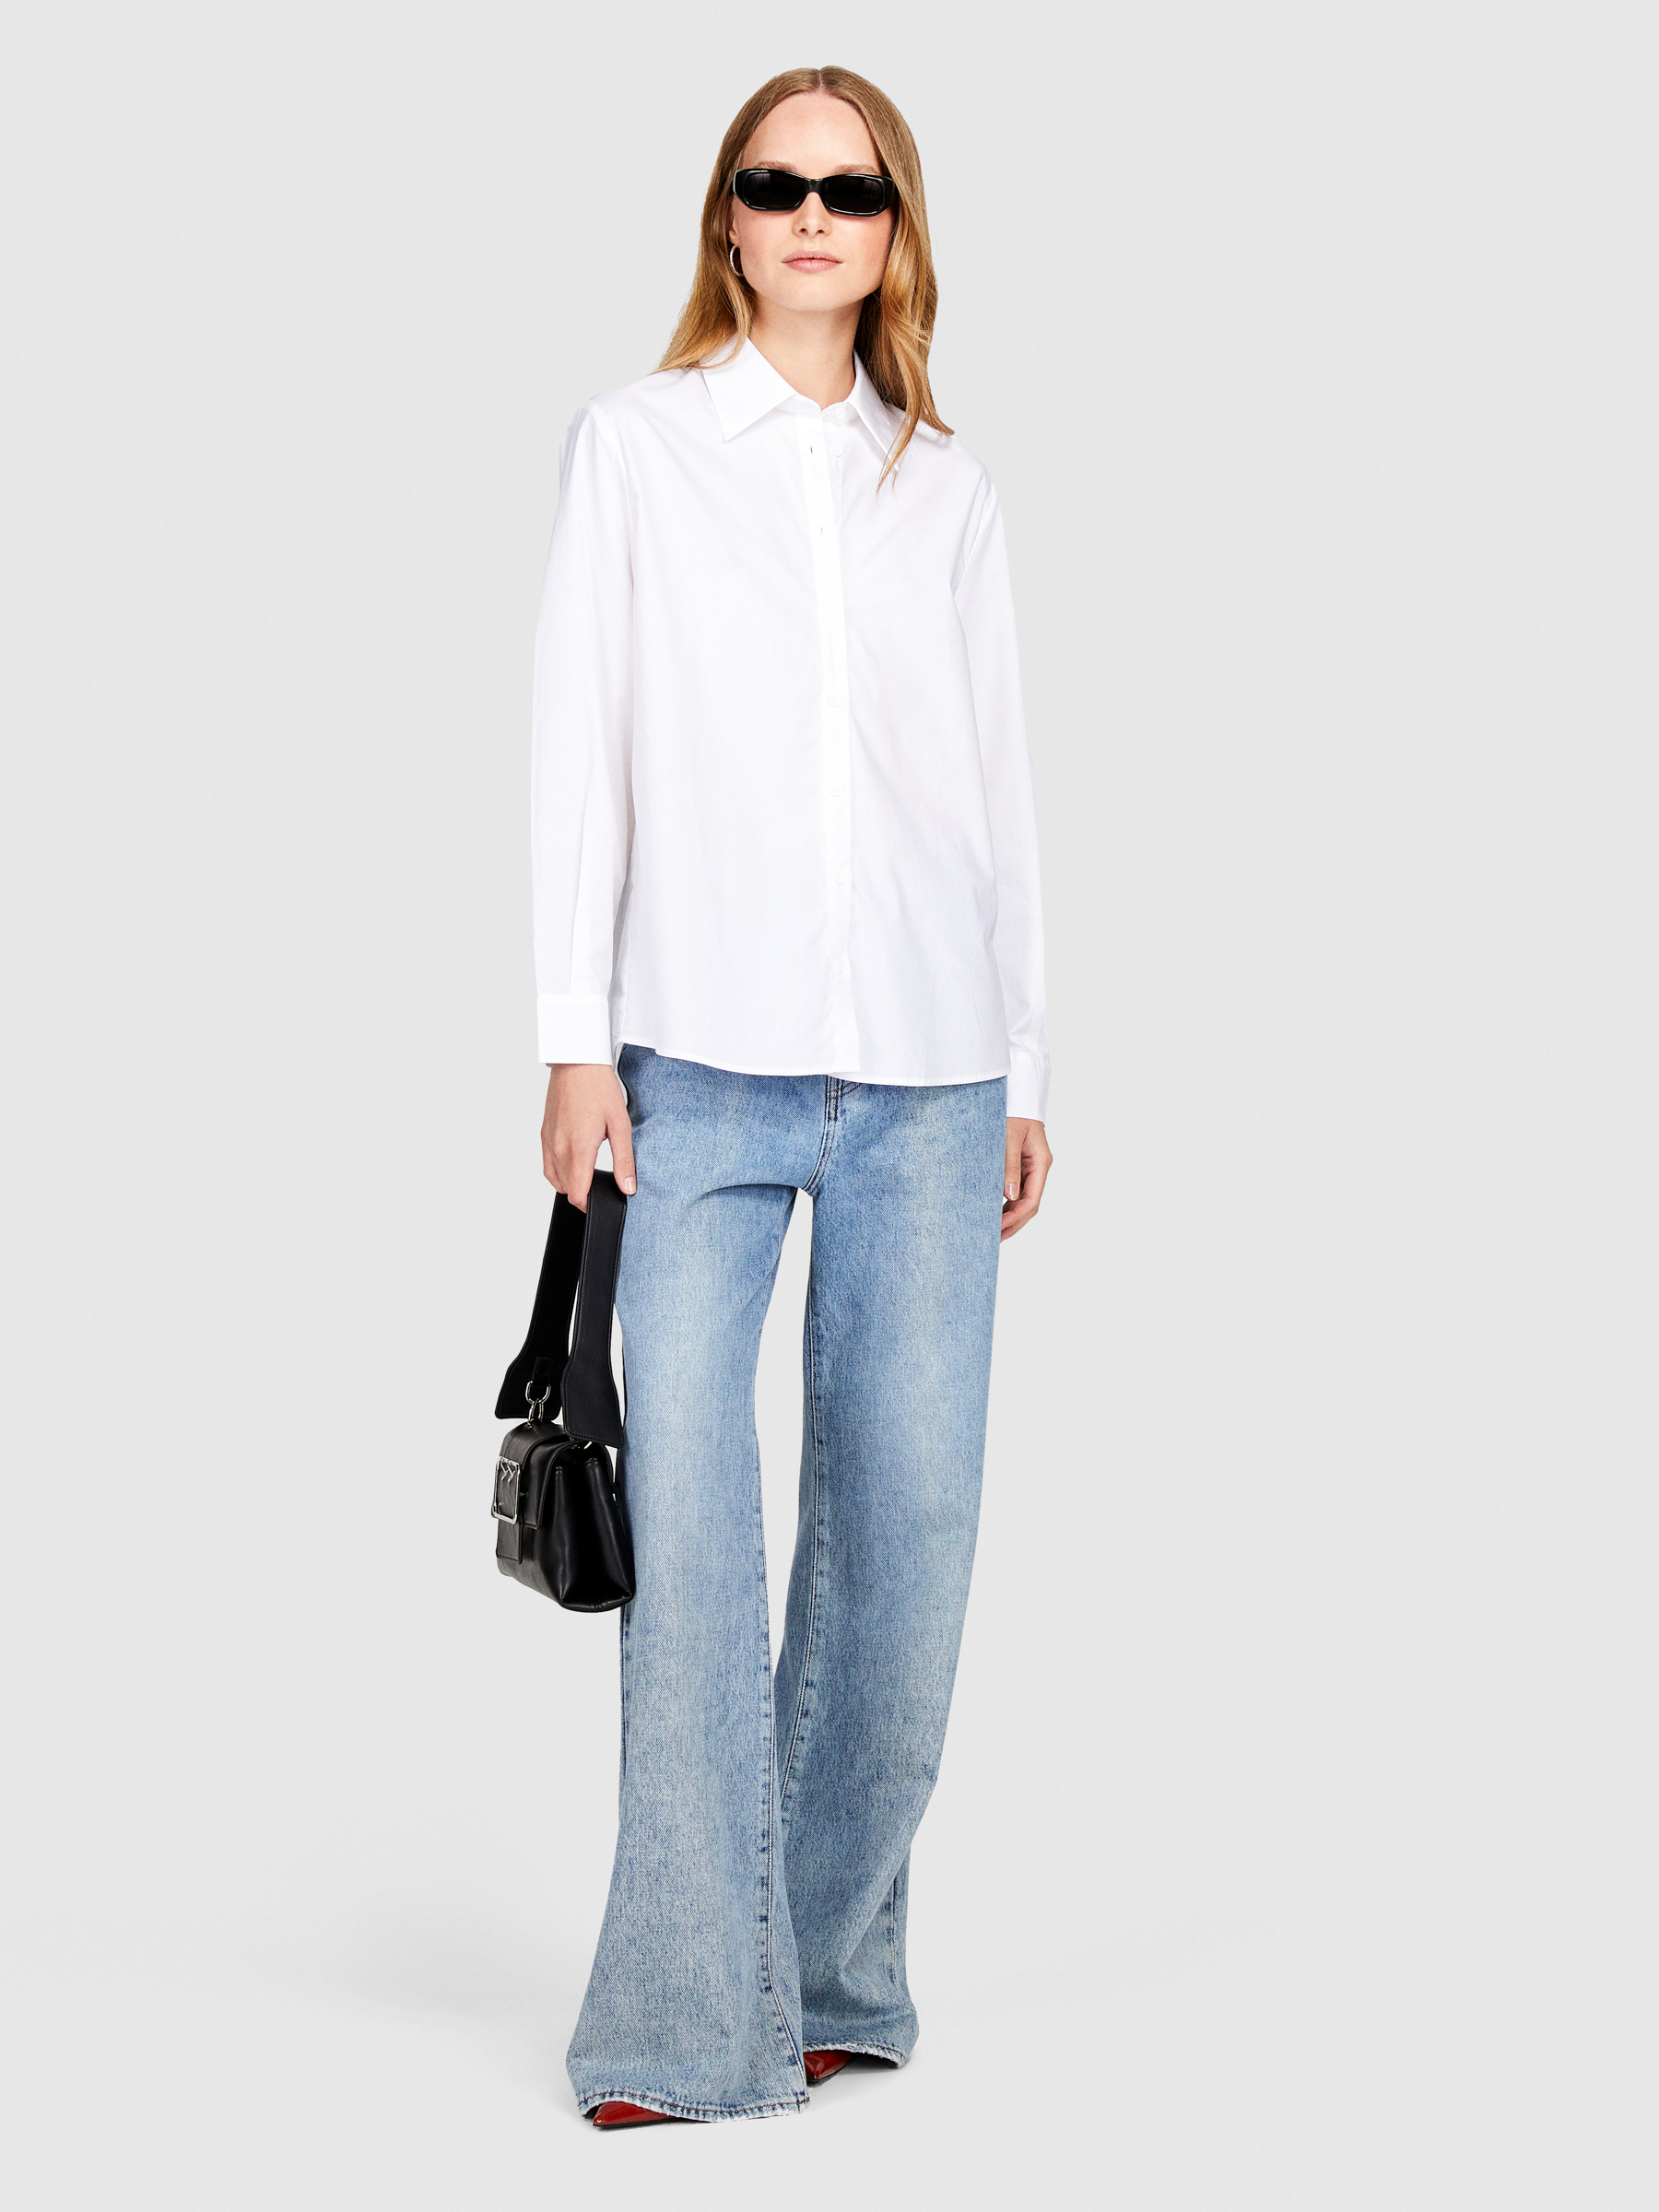 Sisley - Comfort Fit Shirt, Woman, White, Size: L